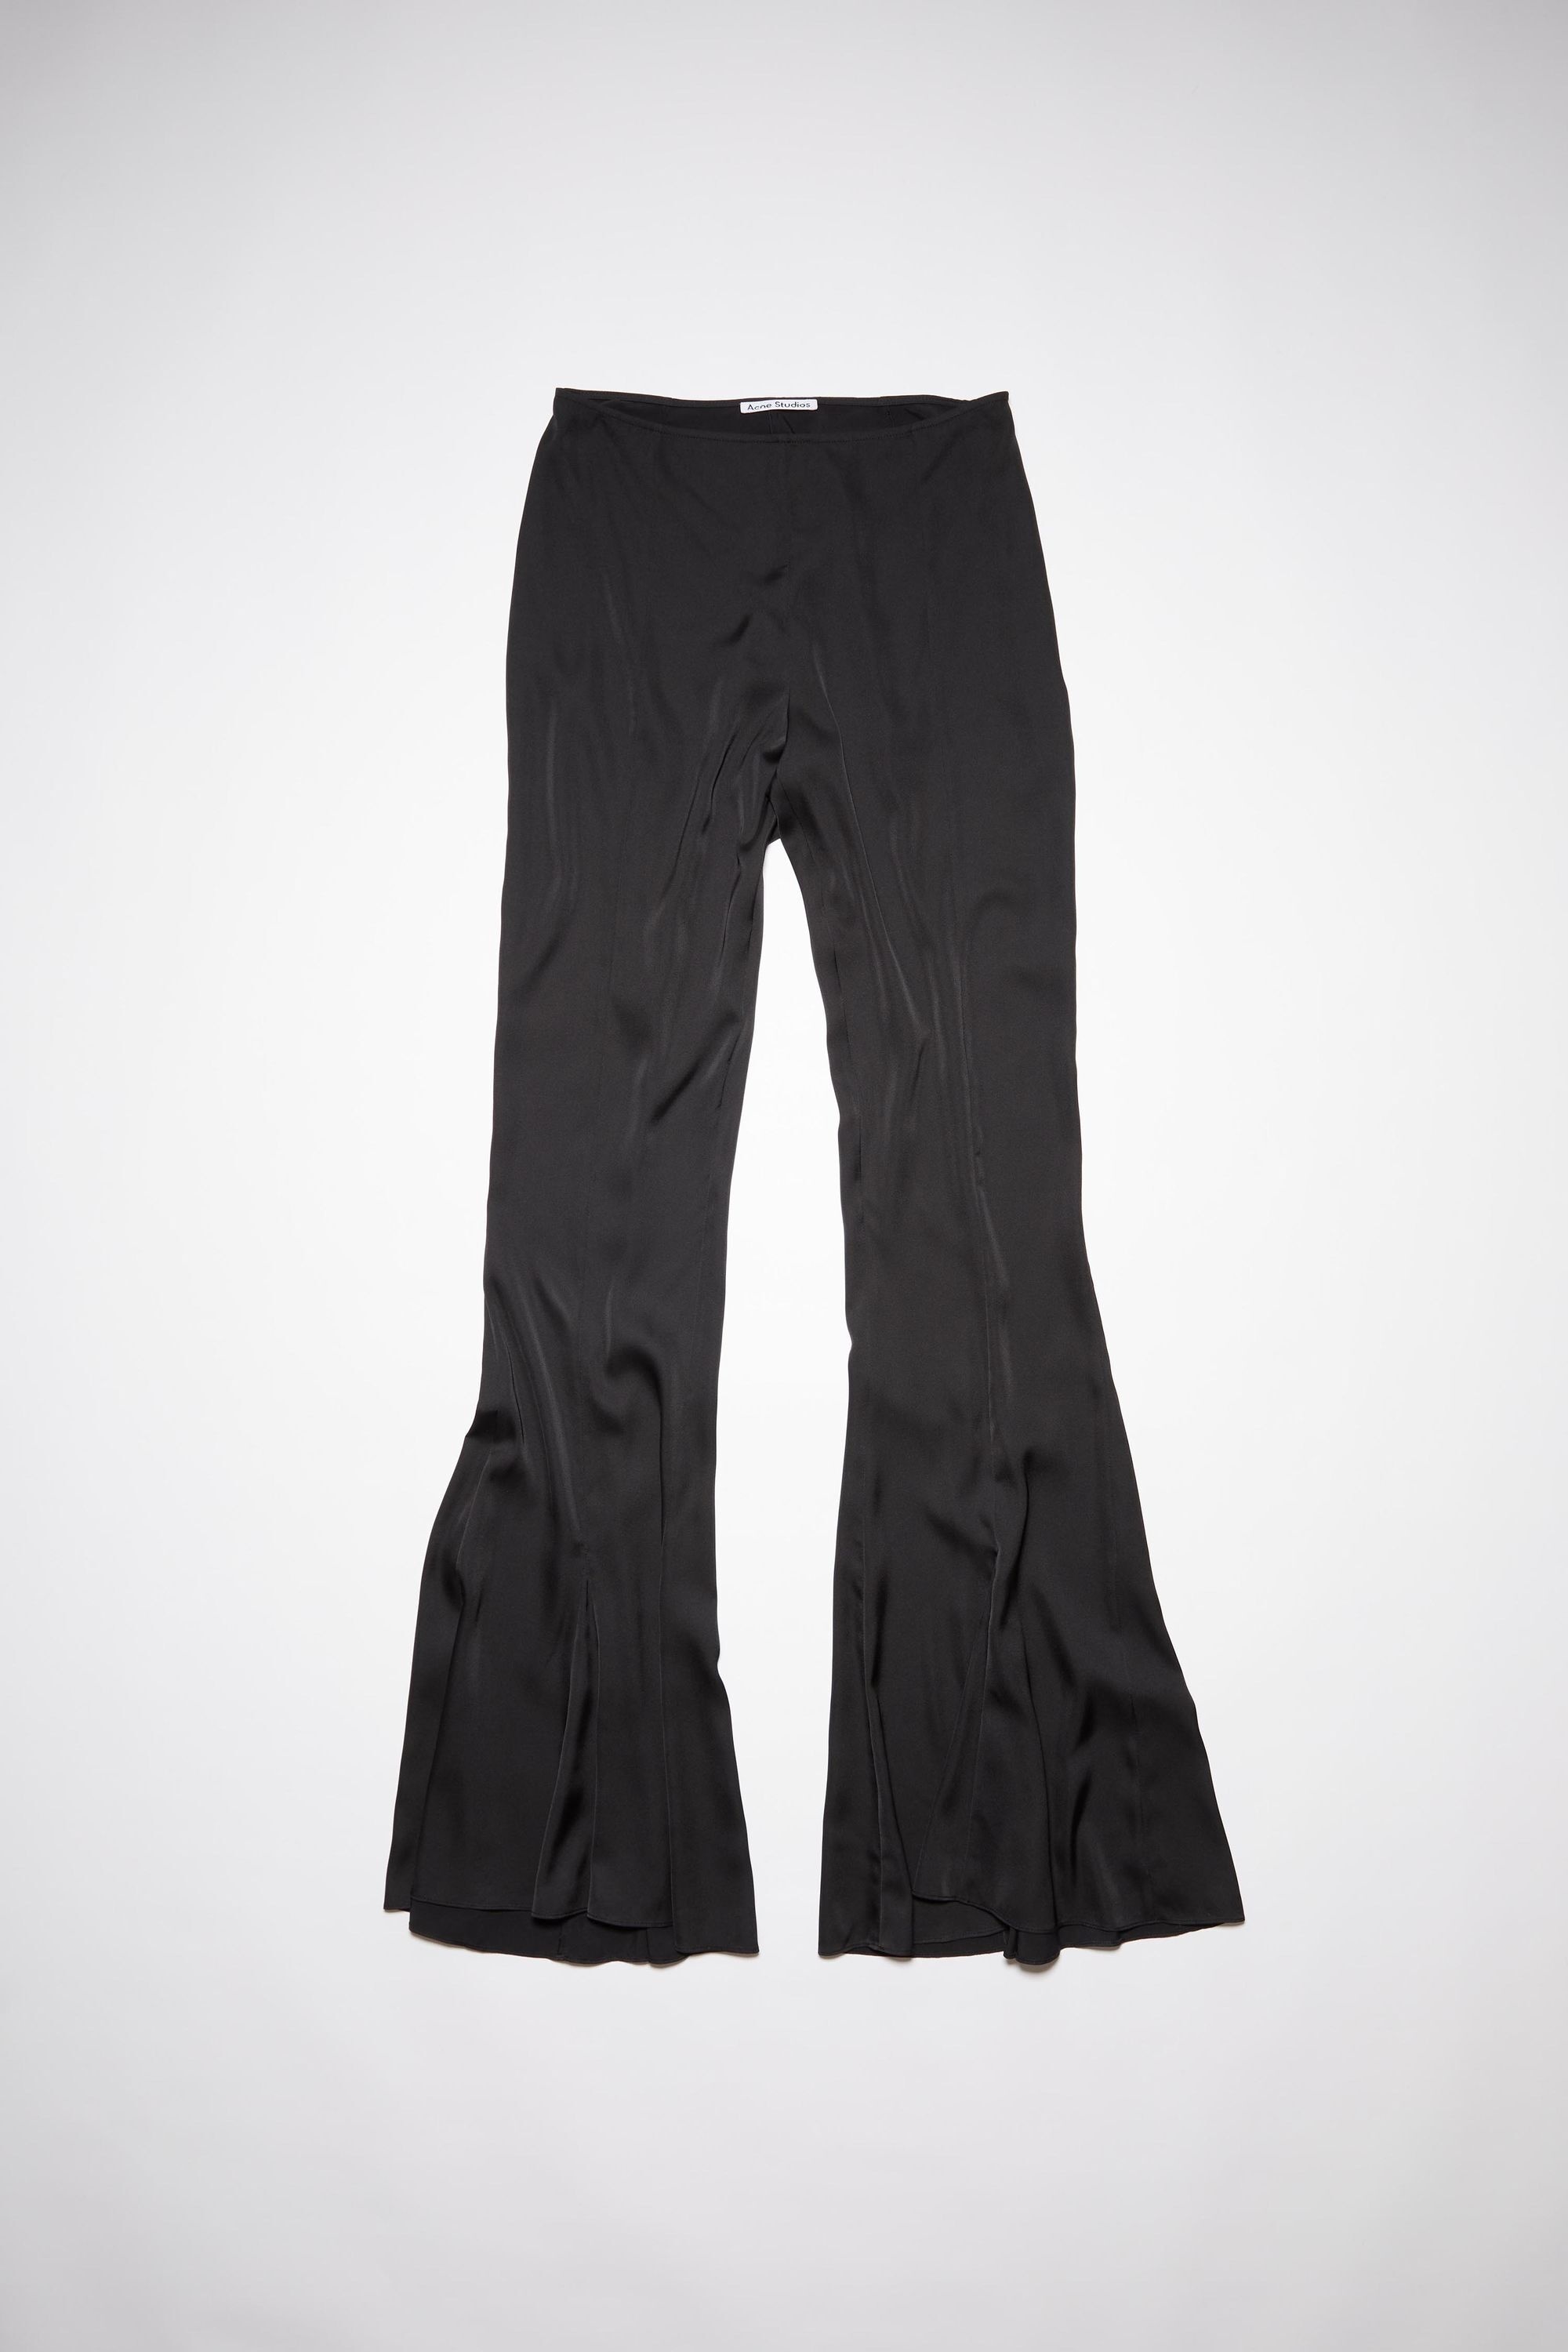 Acne Studios Satin flared trousers - Black | REVERSIBLE